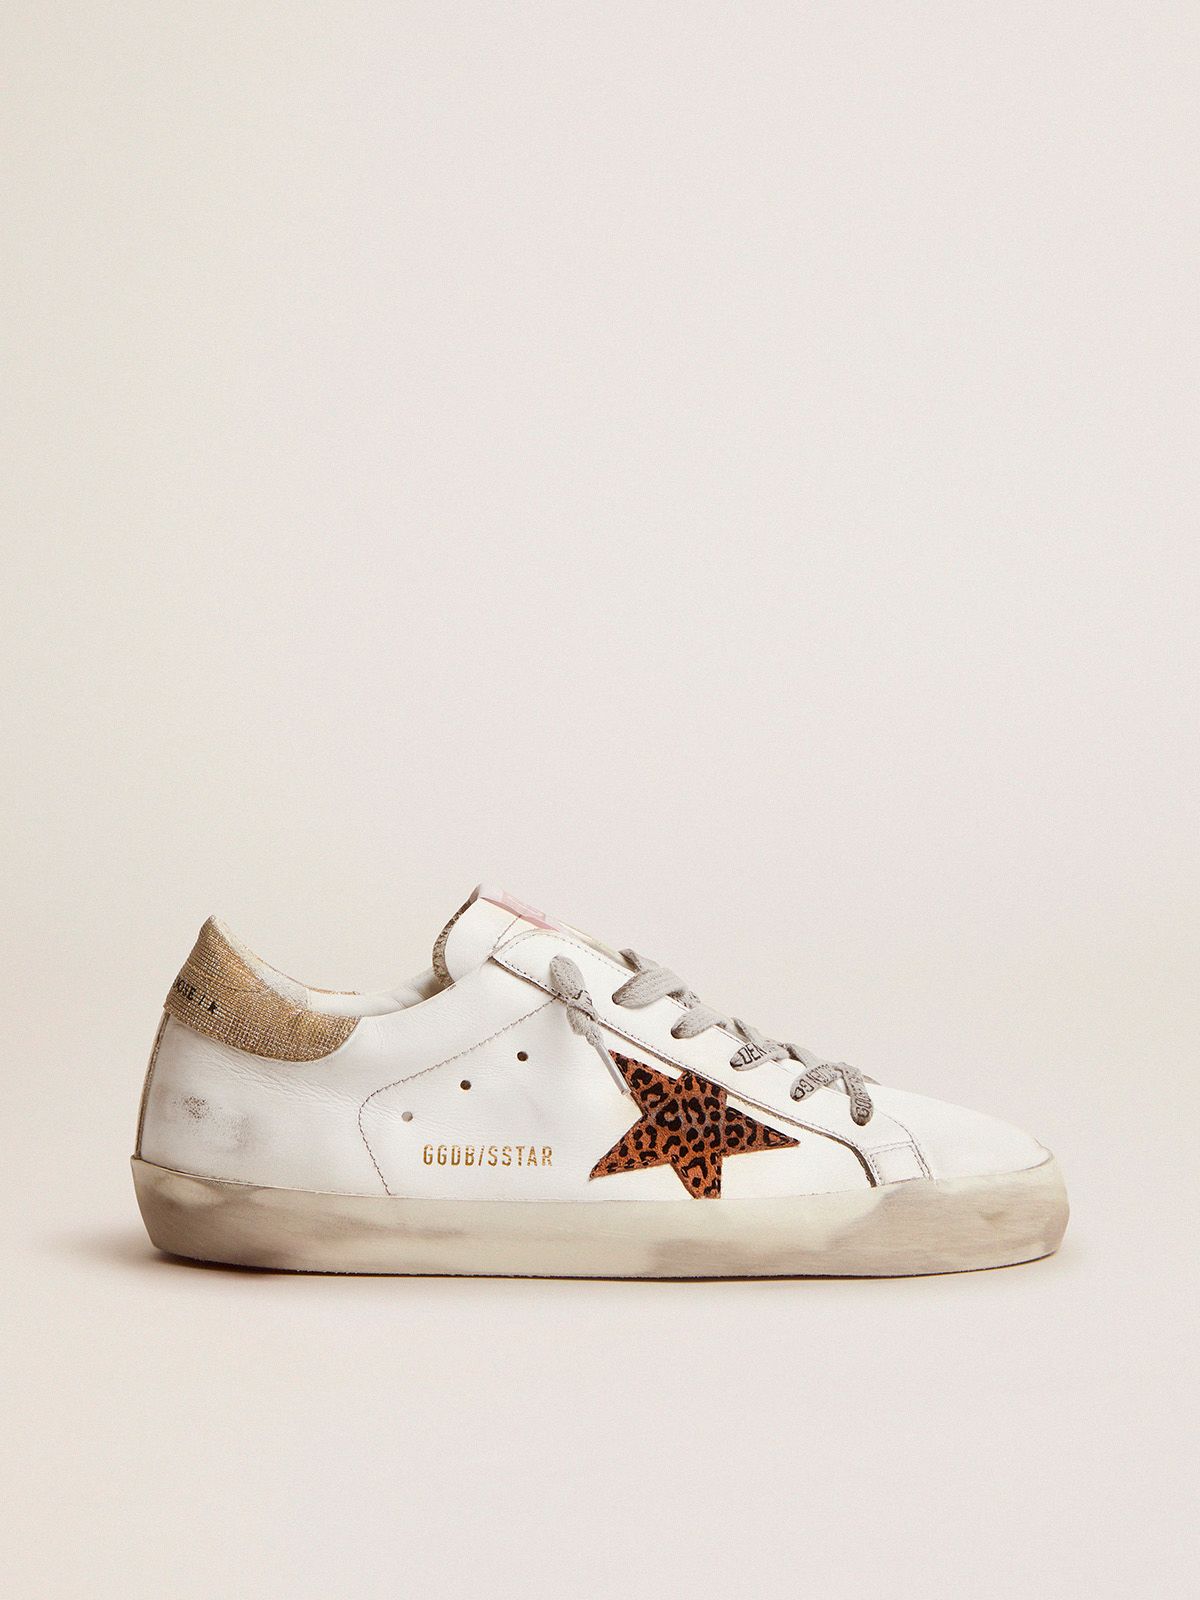 Super-Star LTD sneakers with leopard-print star and gold glitter heel tab